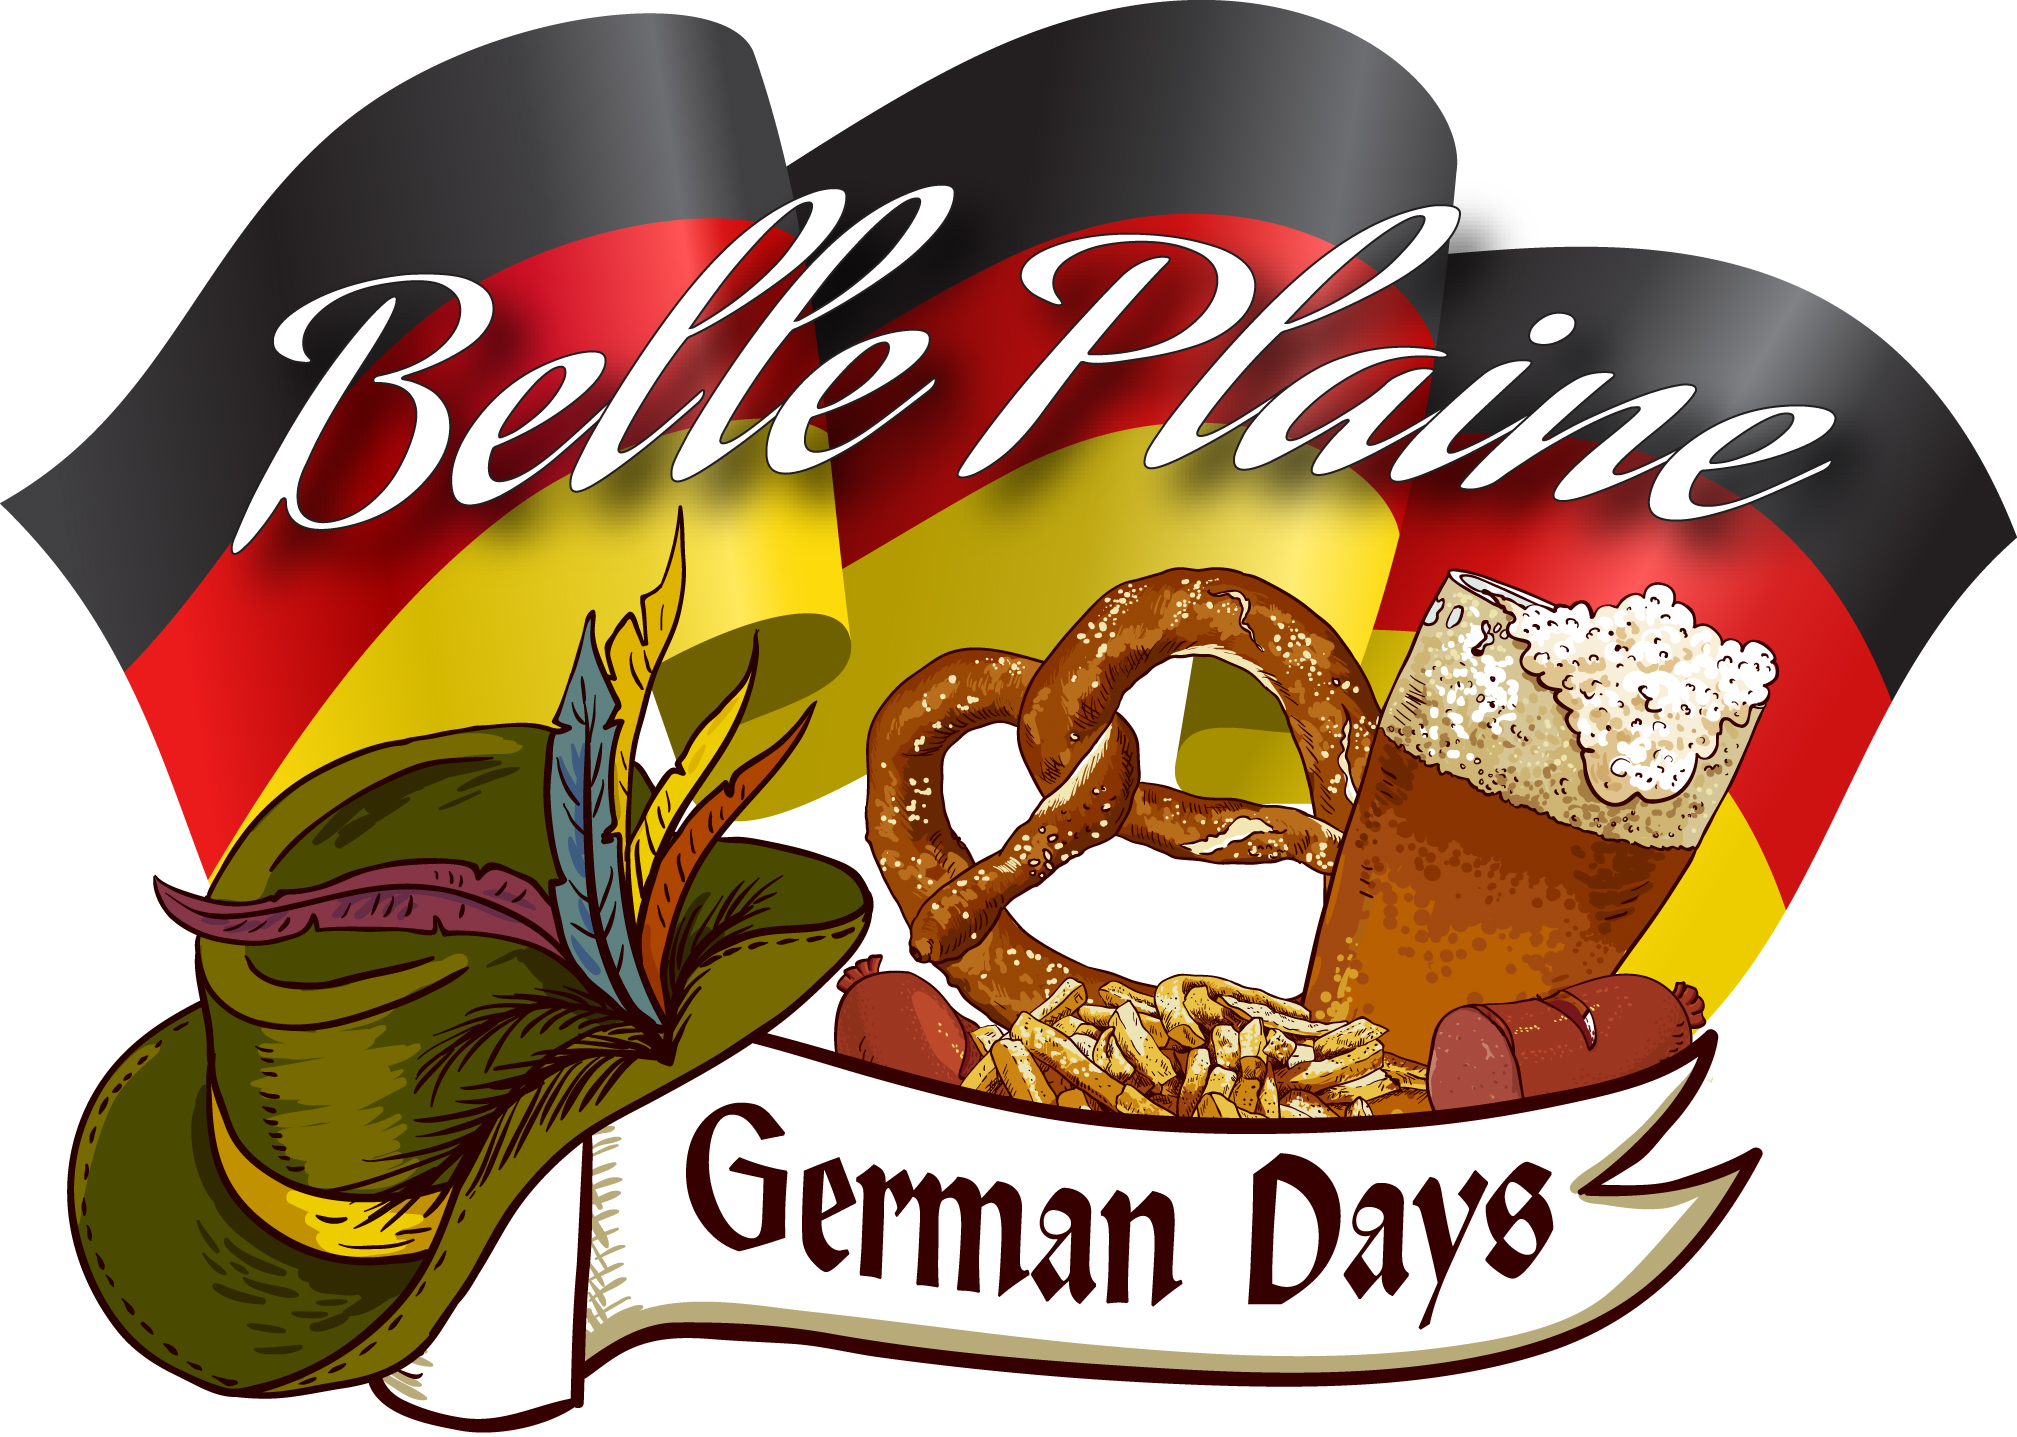 Belle Plaine German Days